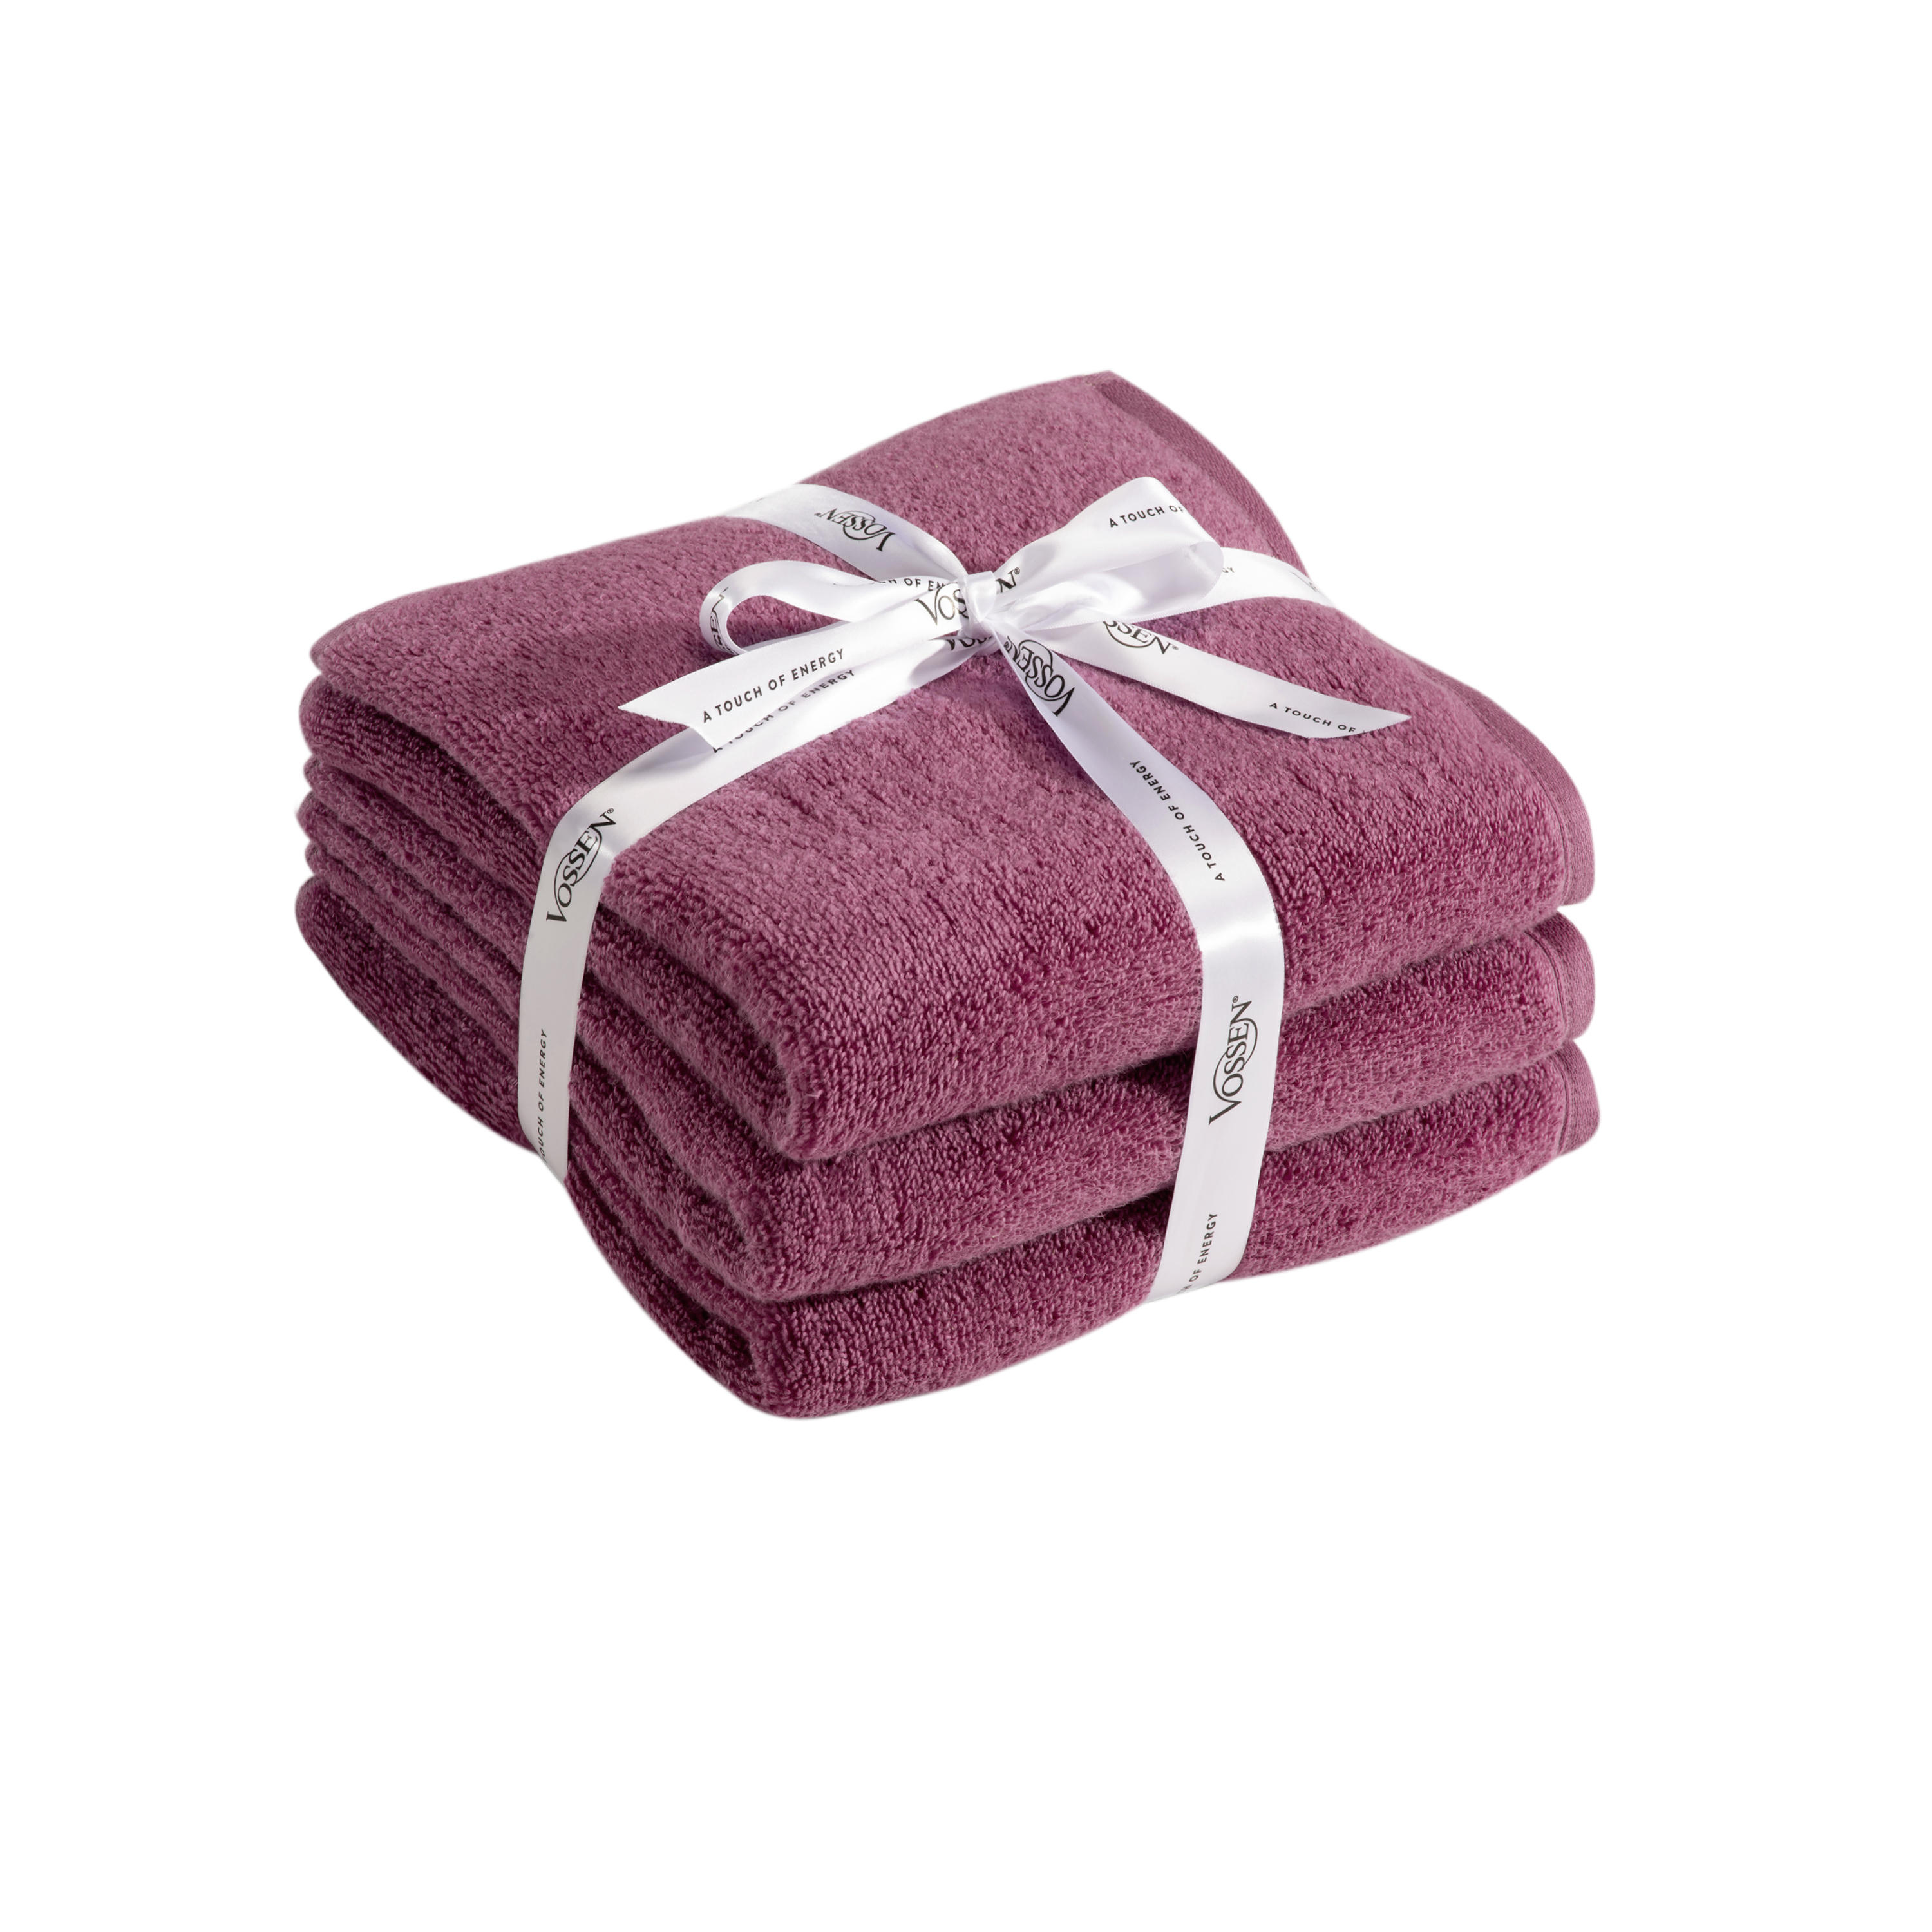 HANDTUCH Smart Towel  - Beere, Basics, Textil (50/100cm) - Vossen